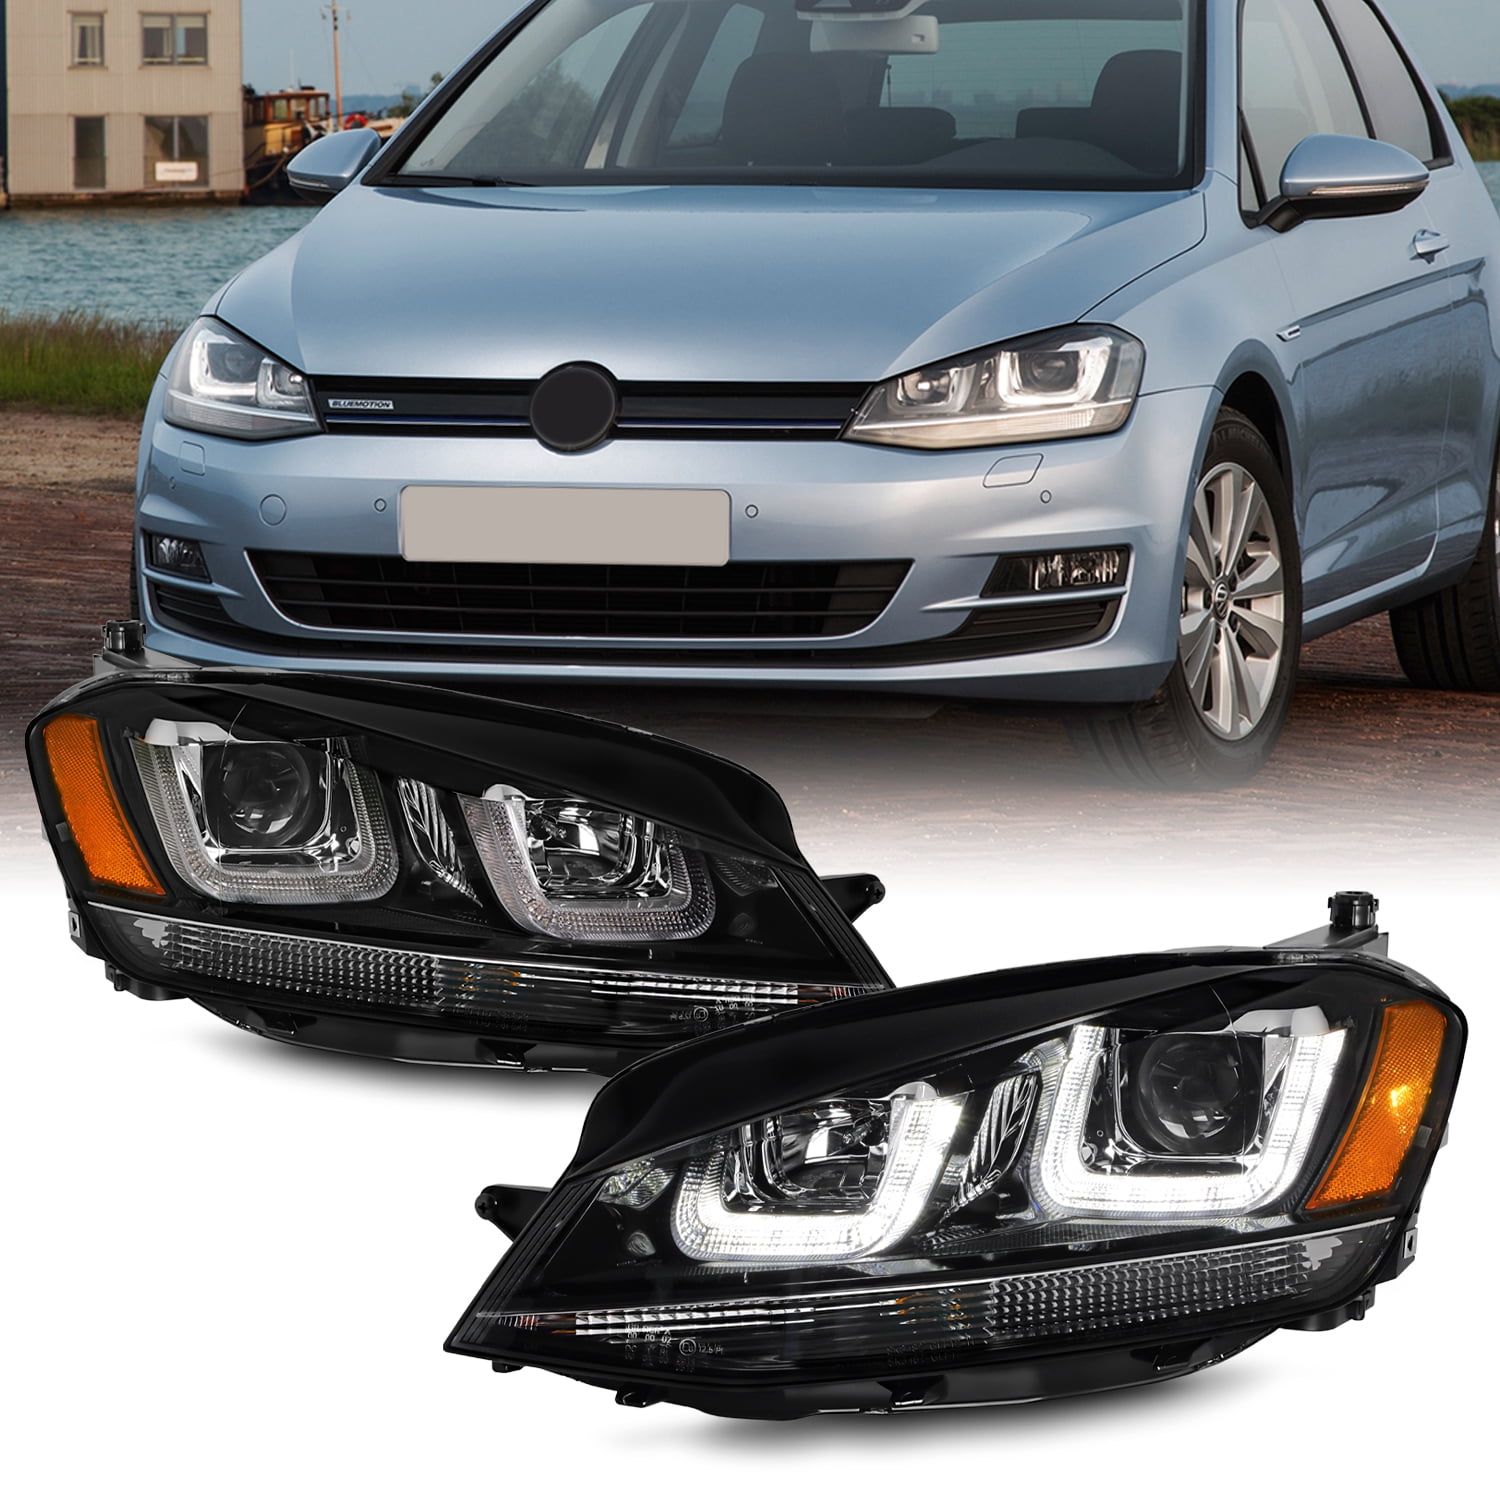  ZMAUTOPARTS Halogen Headlight Headlamp Black Passenger Side  Compatible with 2015-2017 Volkswagen Golf/GTI Mk7 : Automotive